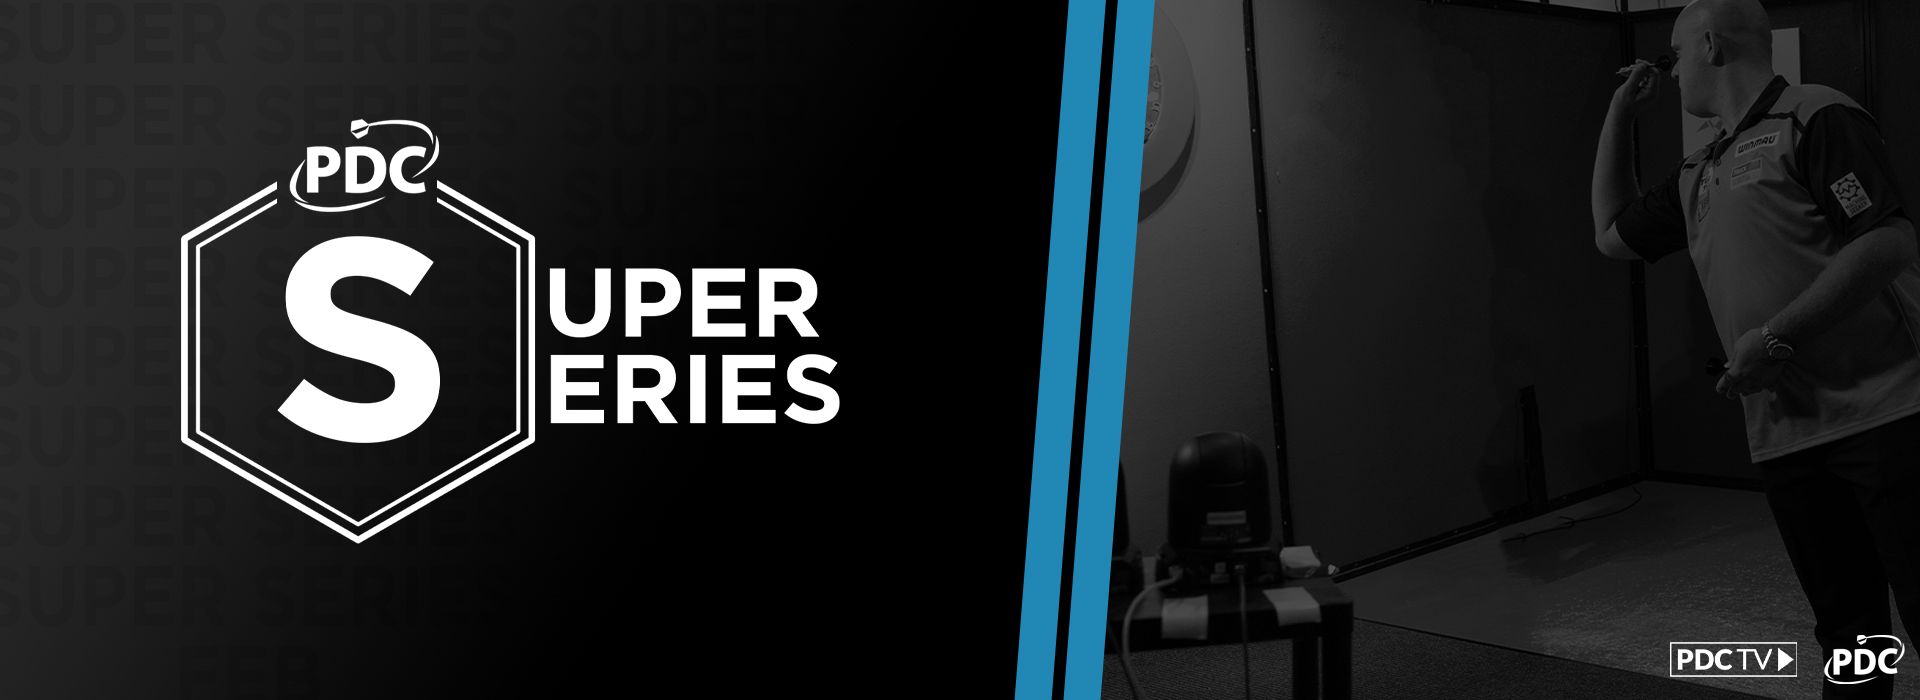 PDC Super Series: Day Three Live Blog